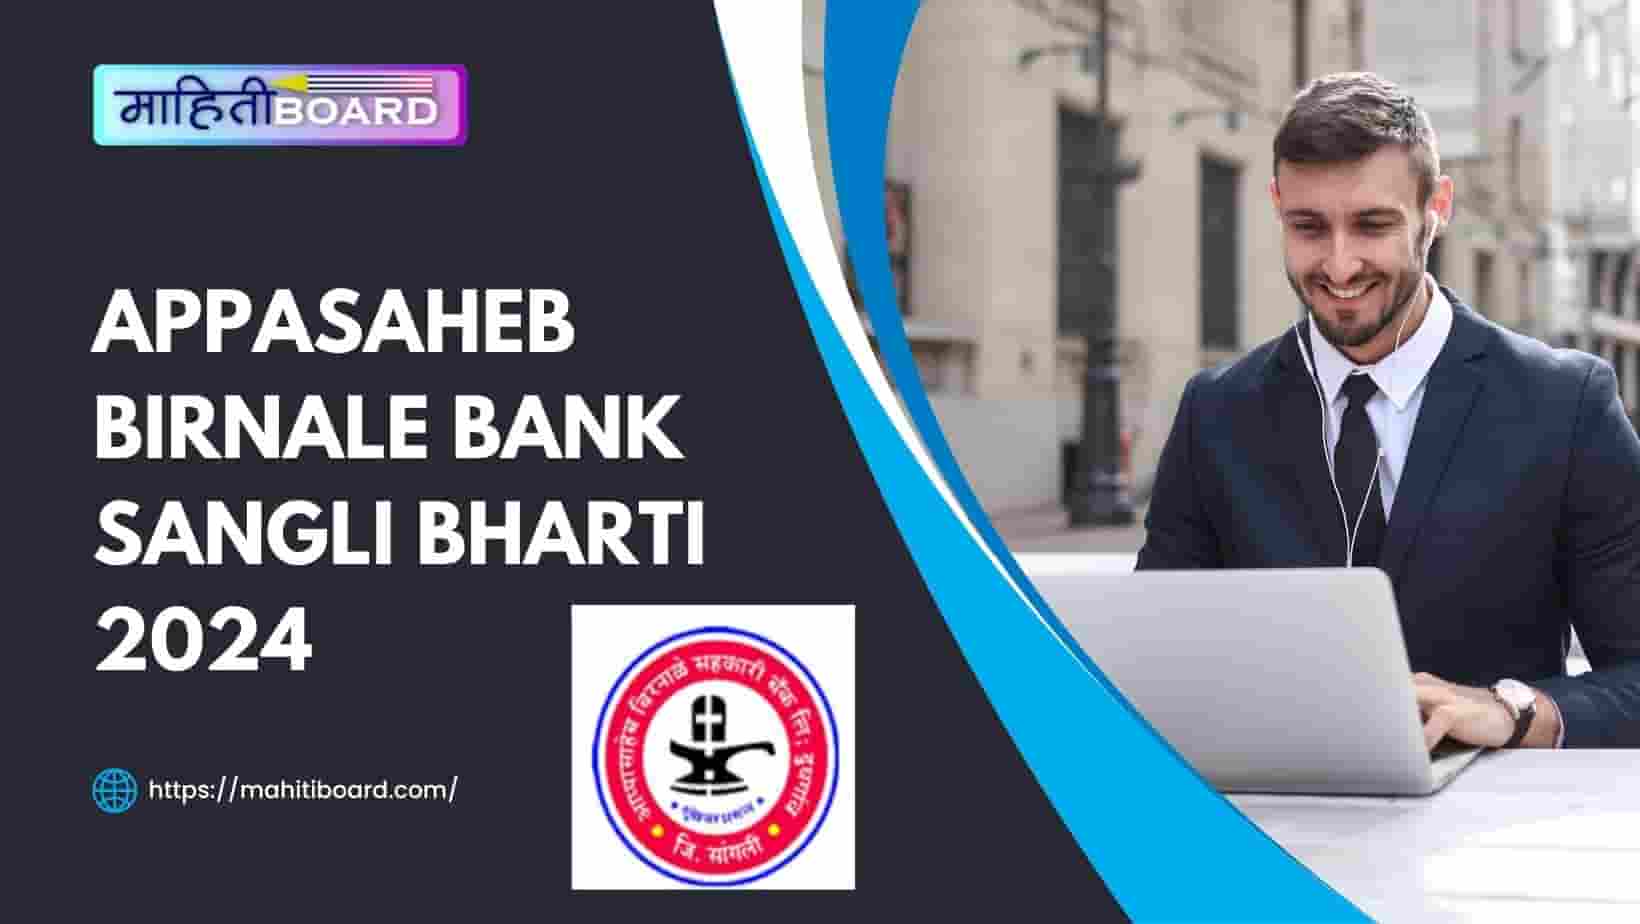 Appasaheb Birnale Bank Sangli Bharti 2024